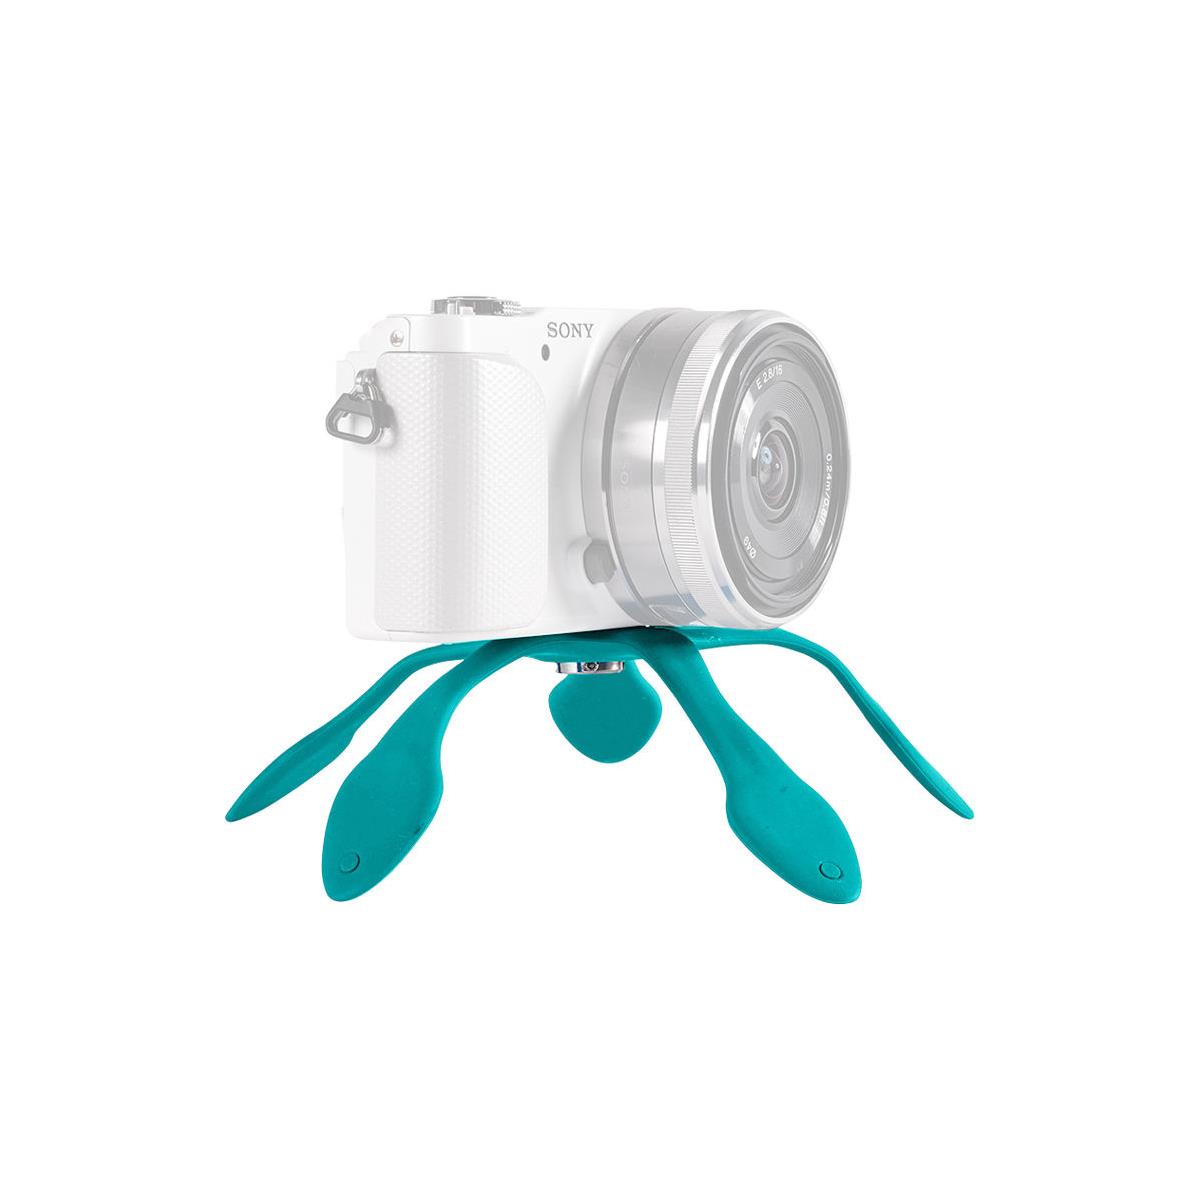 Image of miggo Splat Flexible Mini Tripod for Mirrorless/Compact Cameras